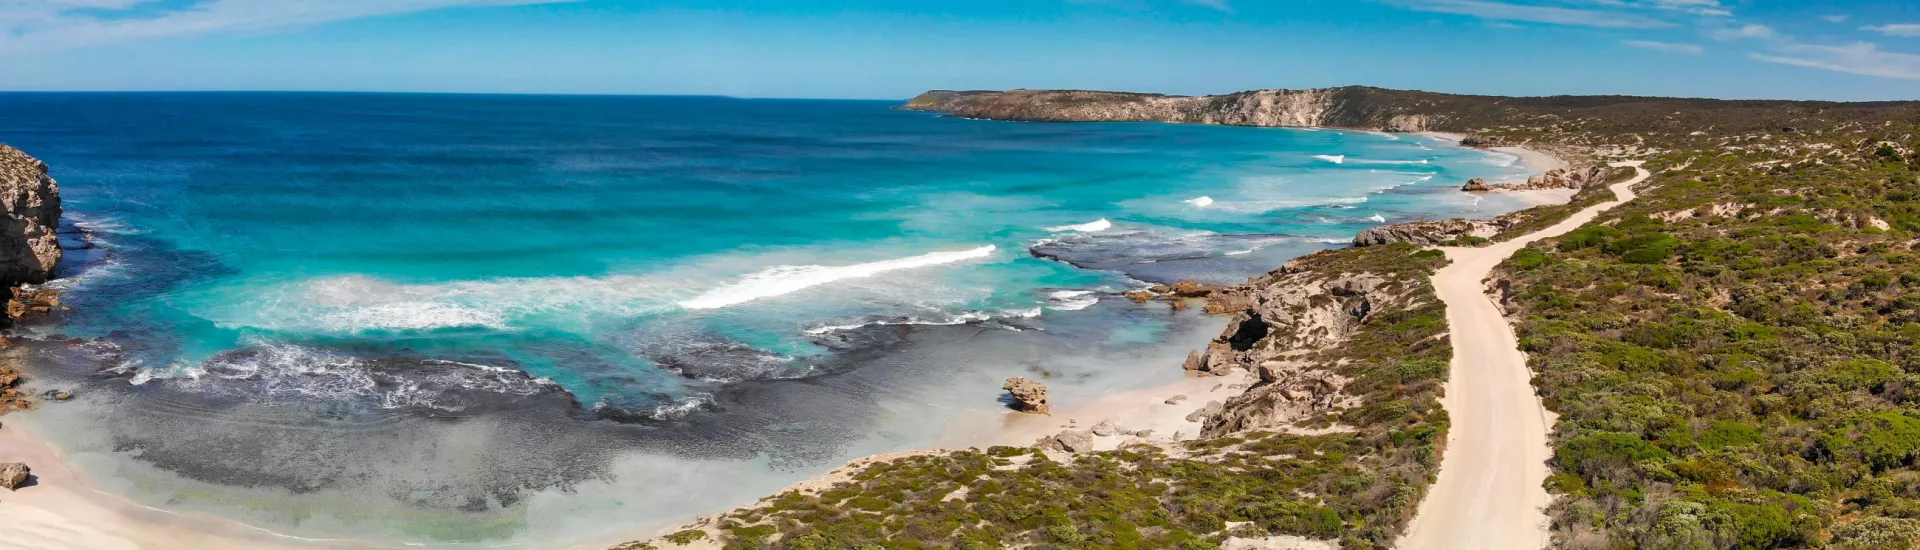 Visit the Australia seashore wonders